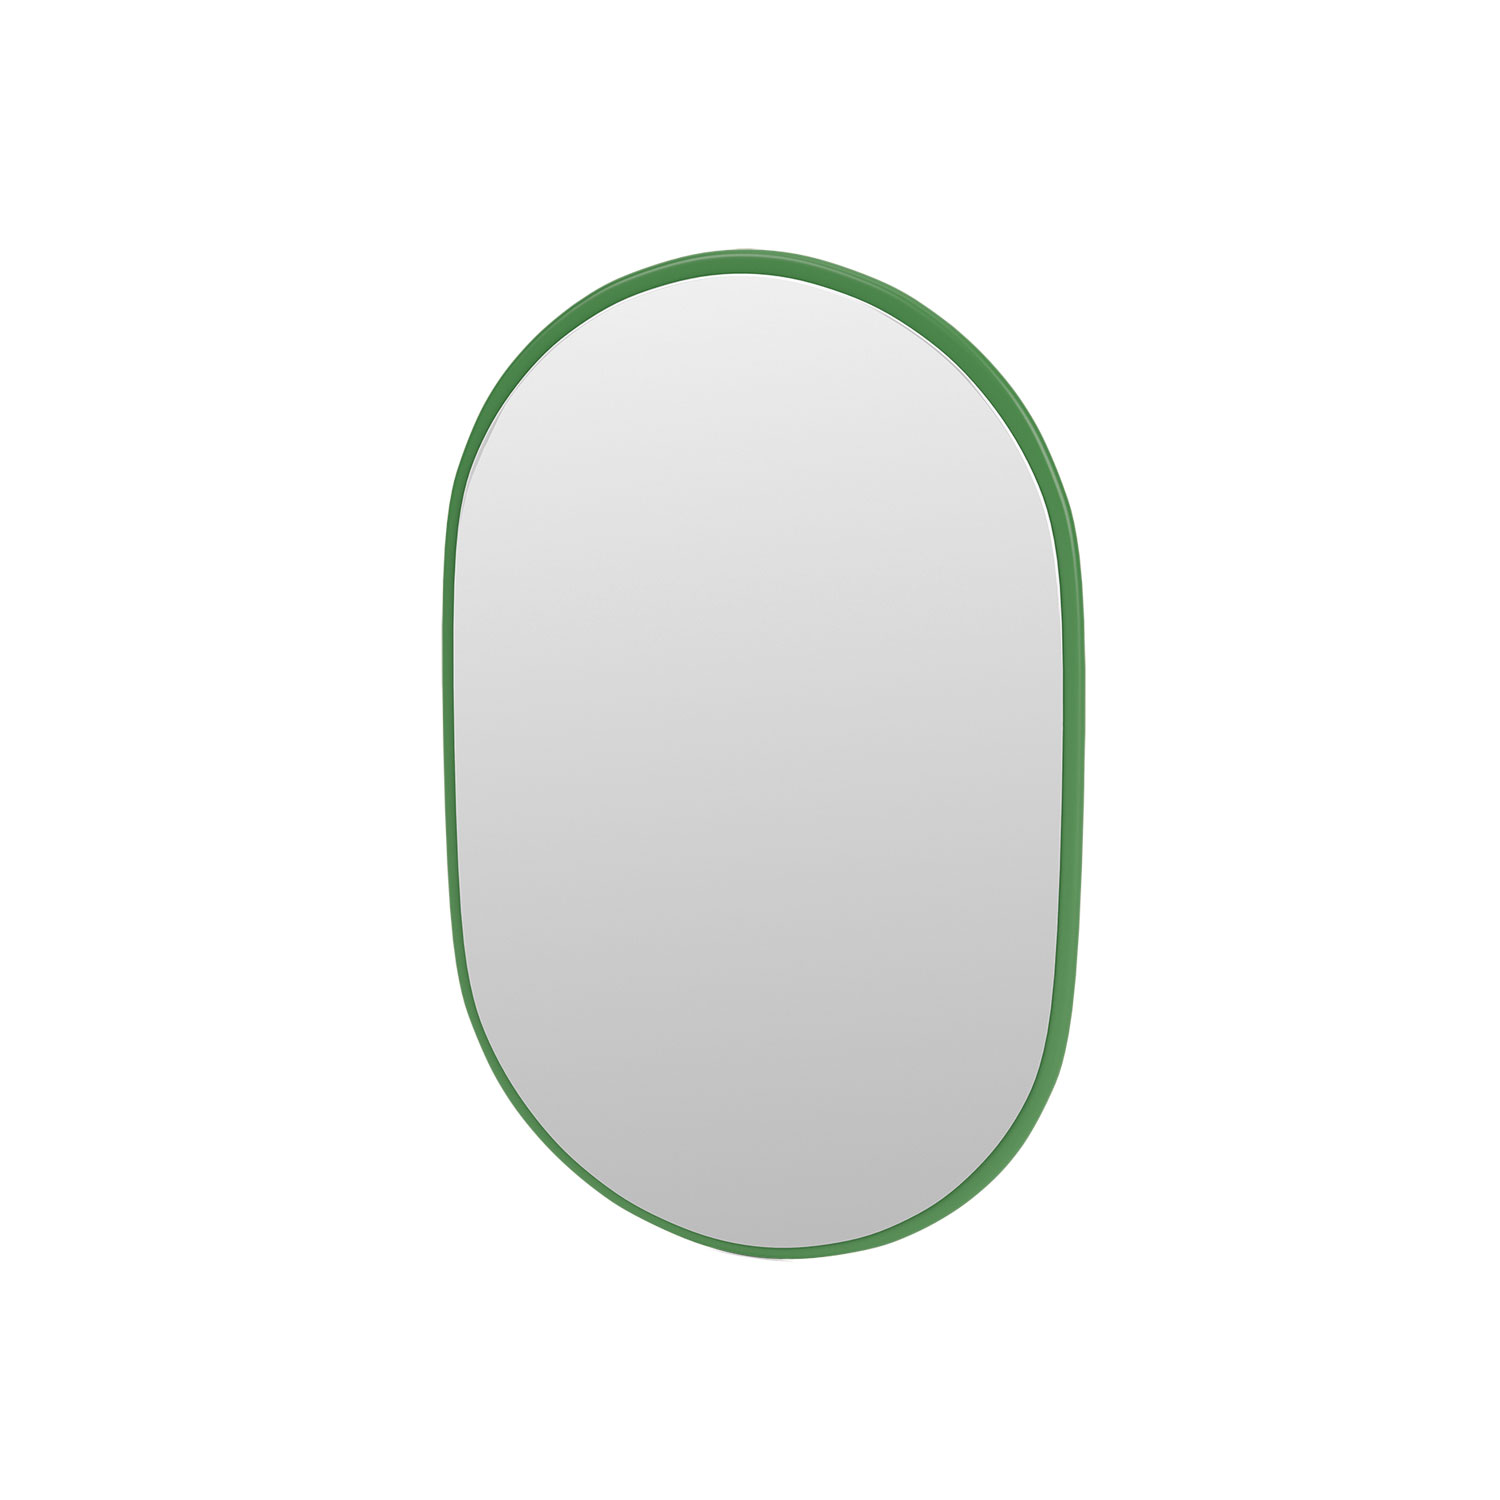 LOOK oval mirror, Parsley